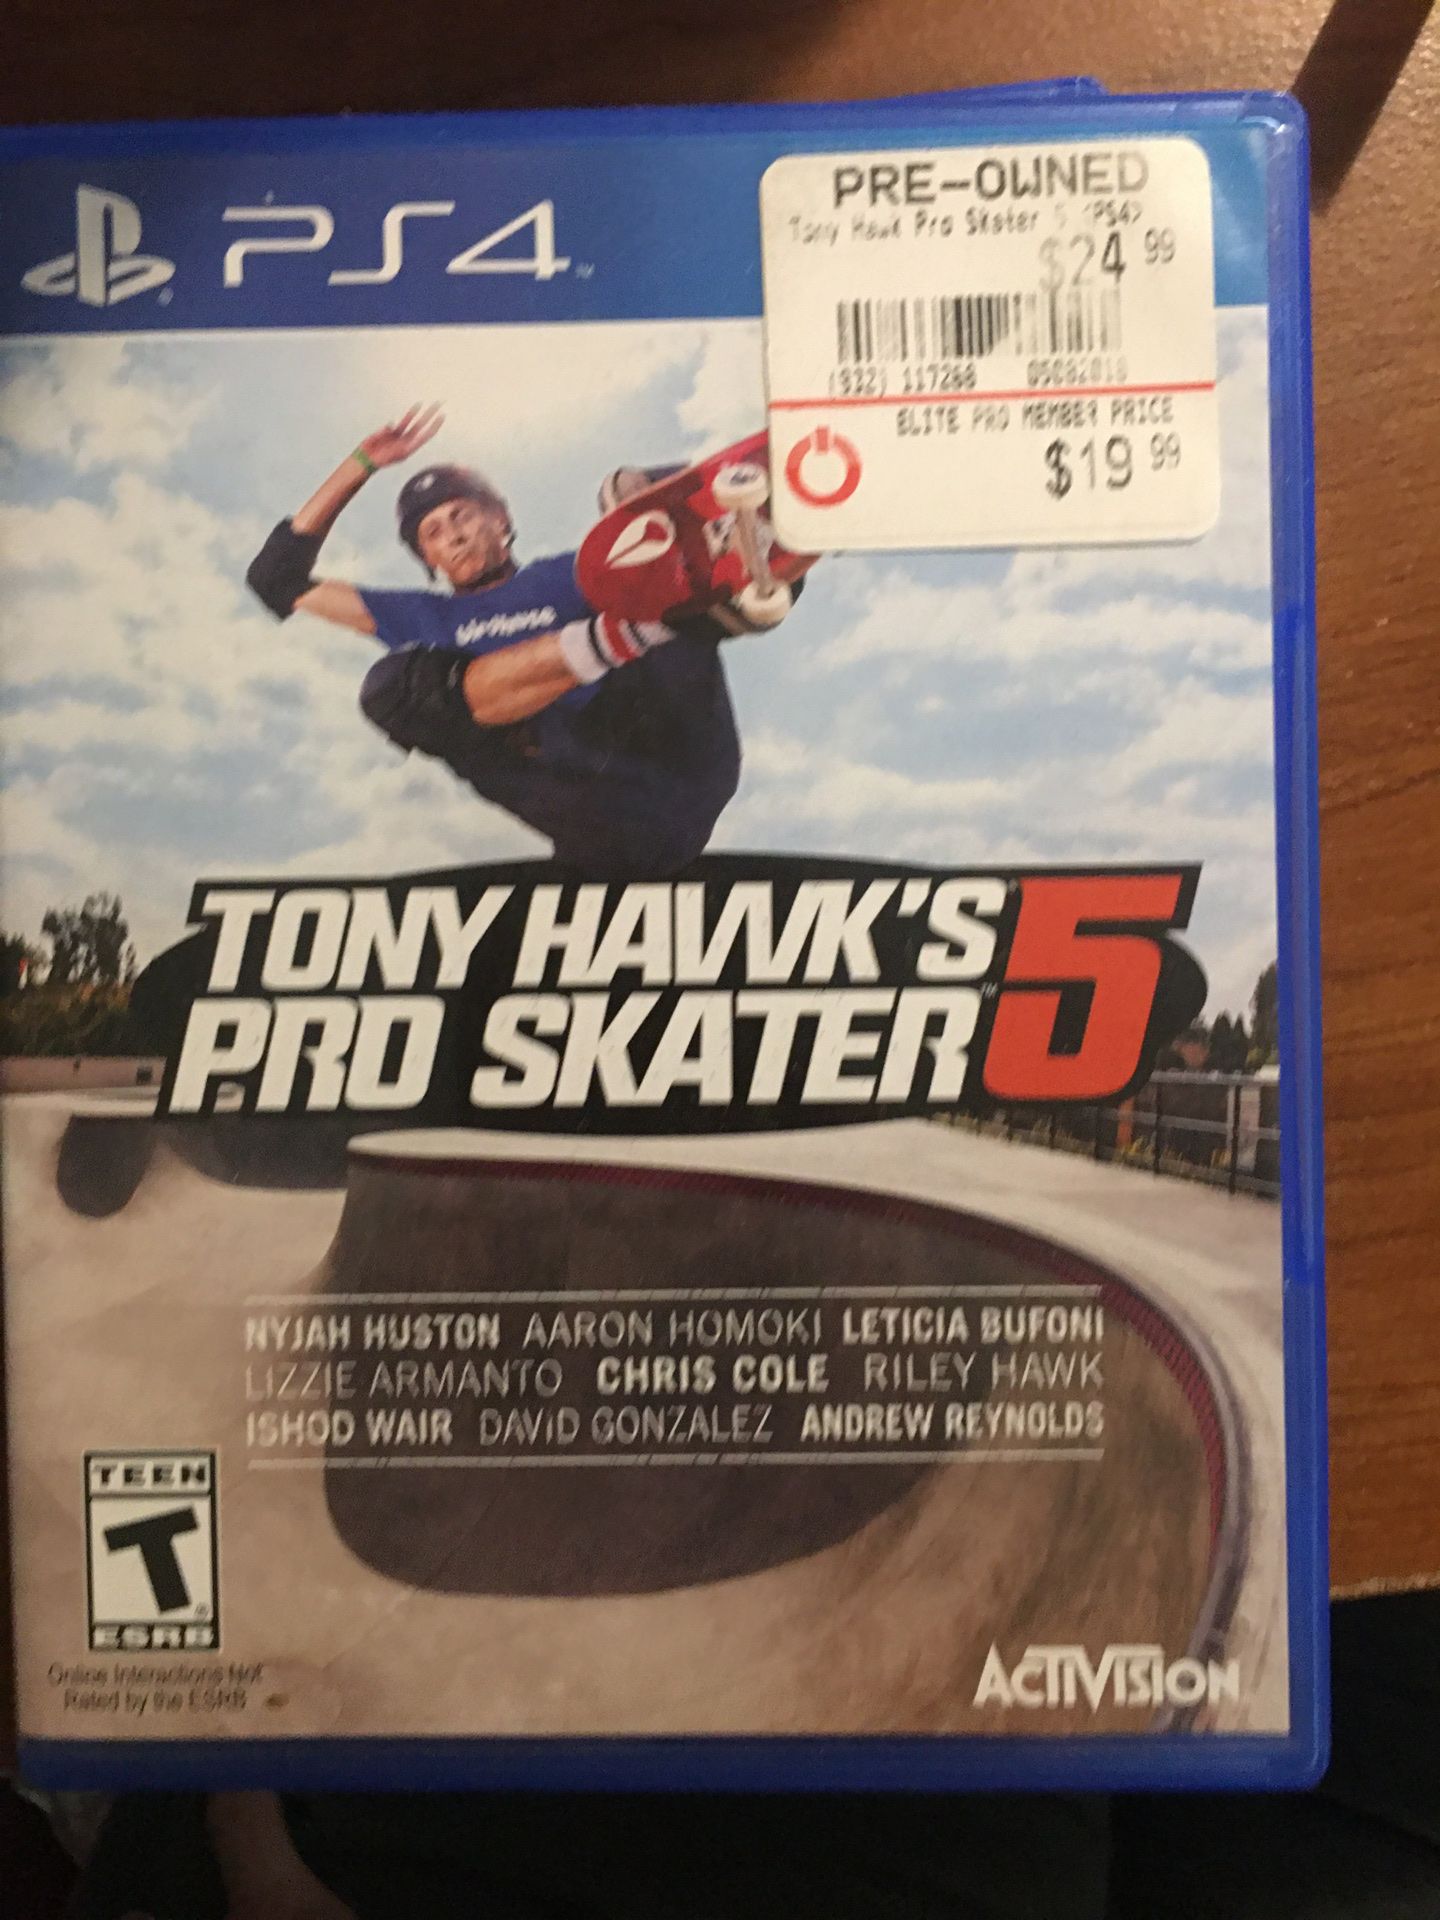 Tony Hawk’s Pro Skater 5 PS4 game